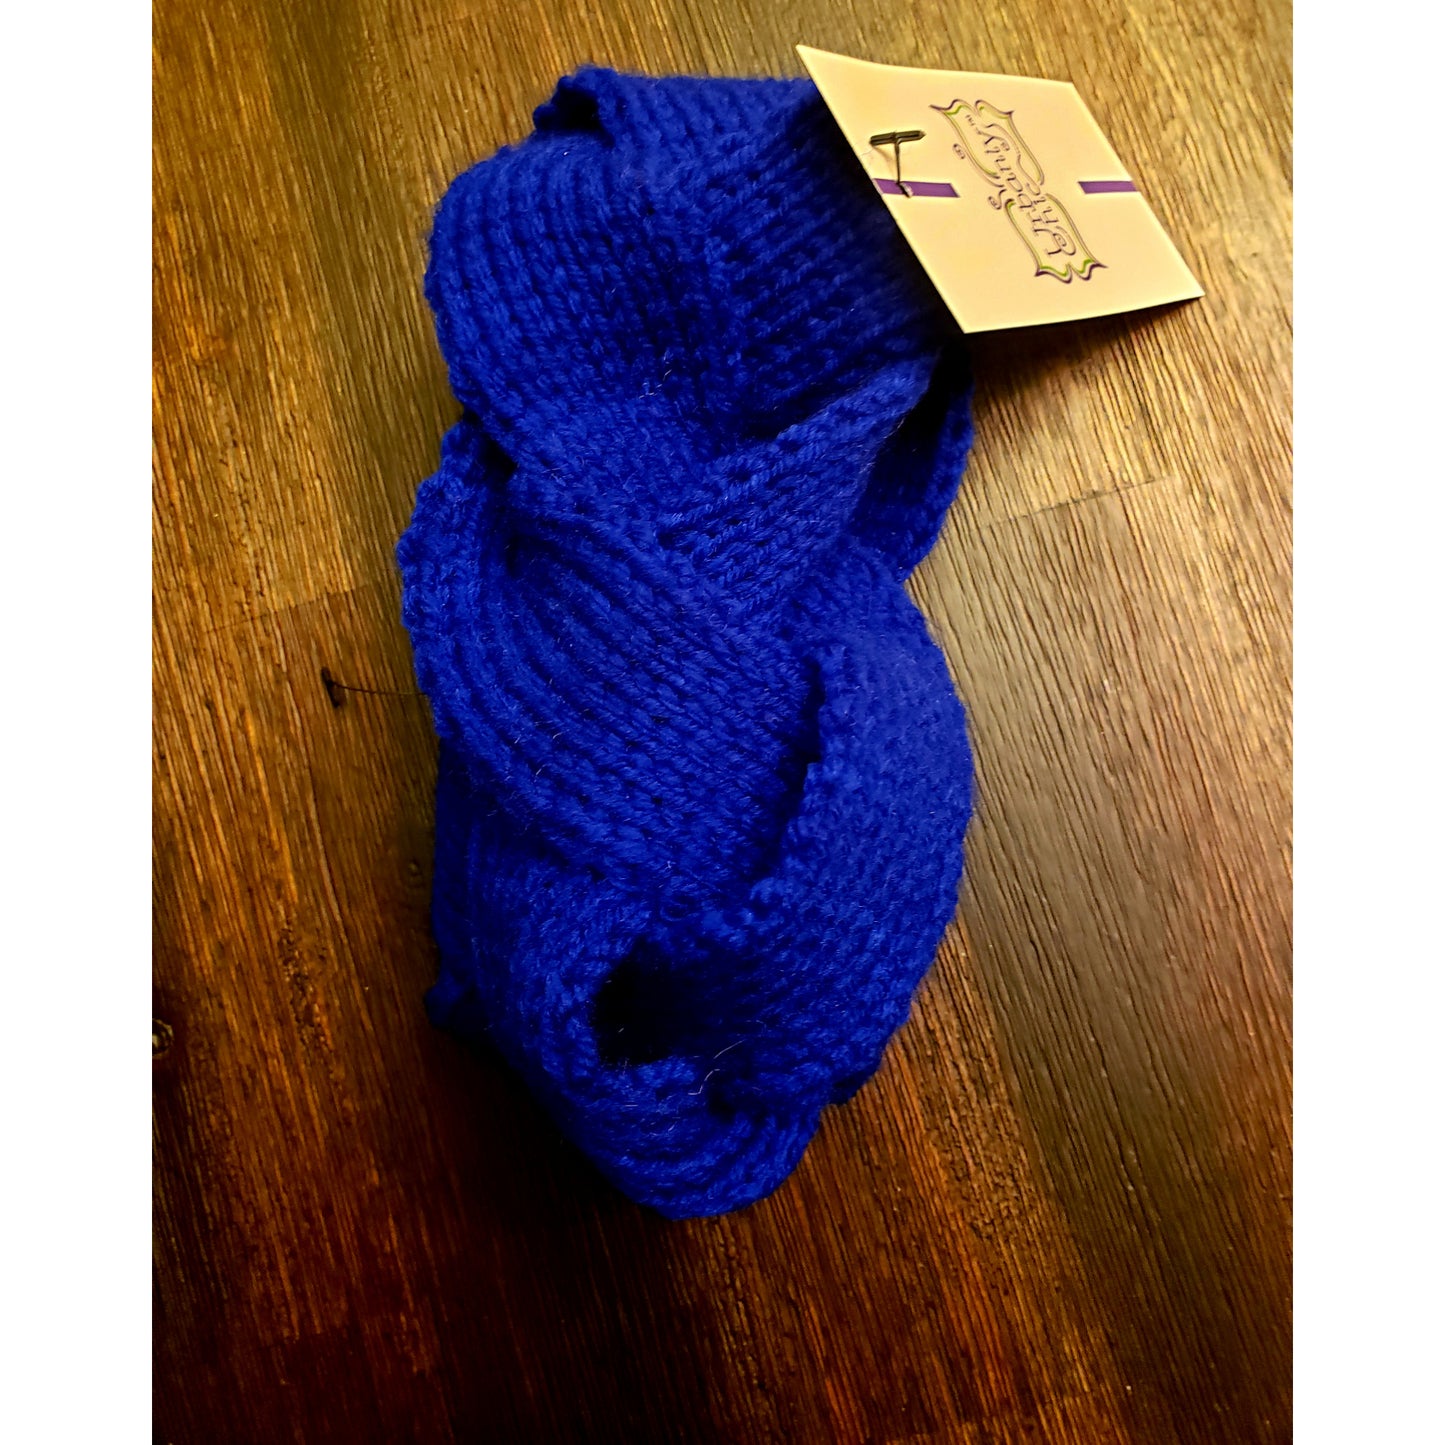 Hand-Knitted Sweater Headband (11 Options)